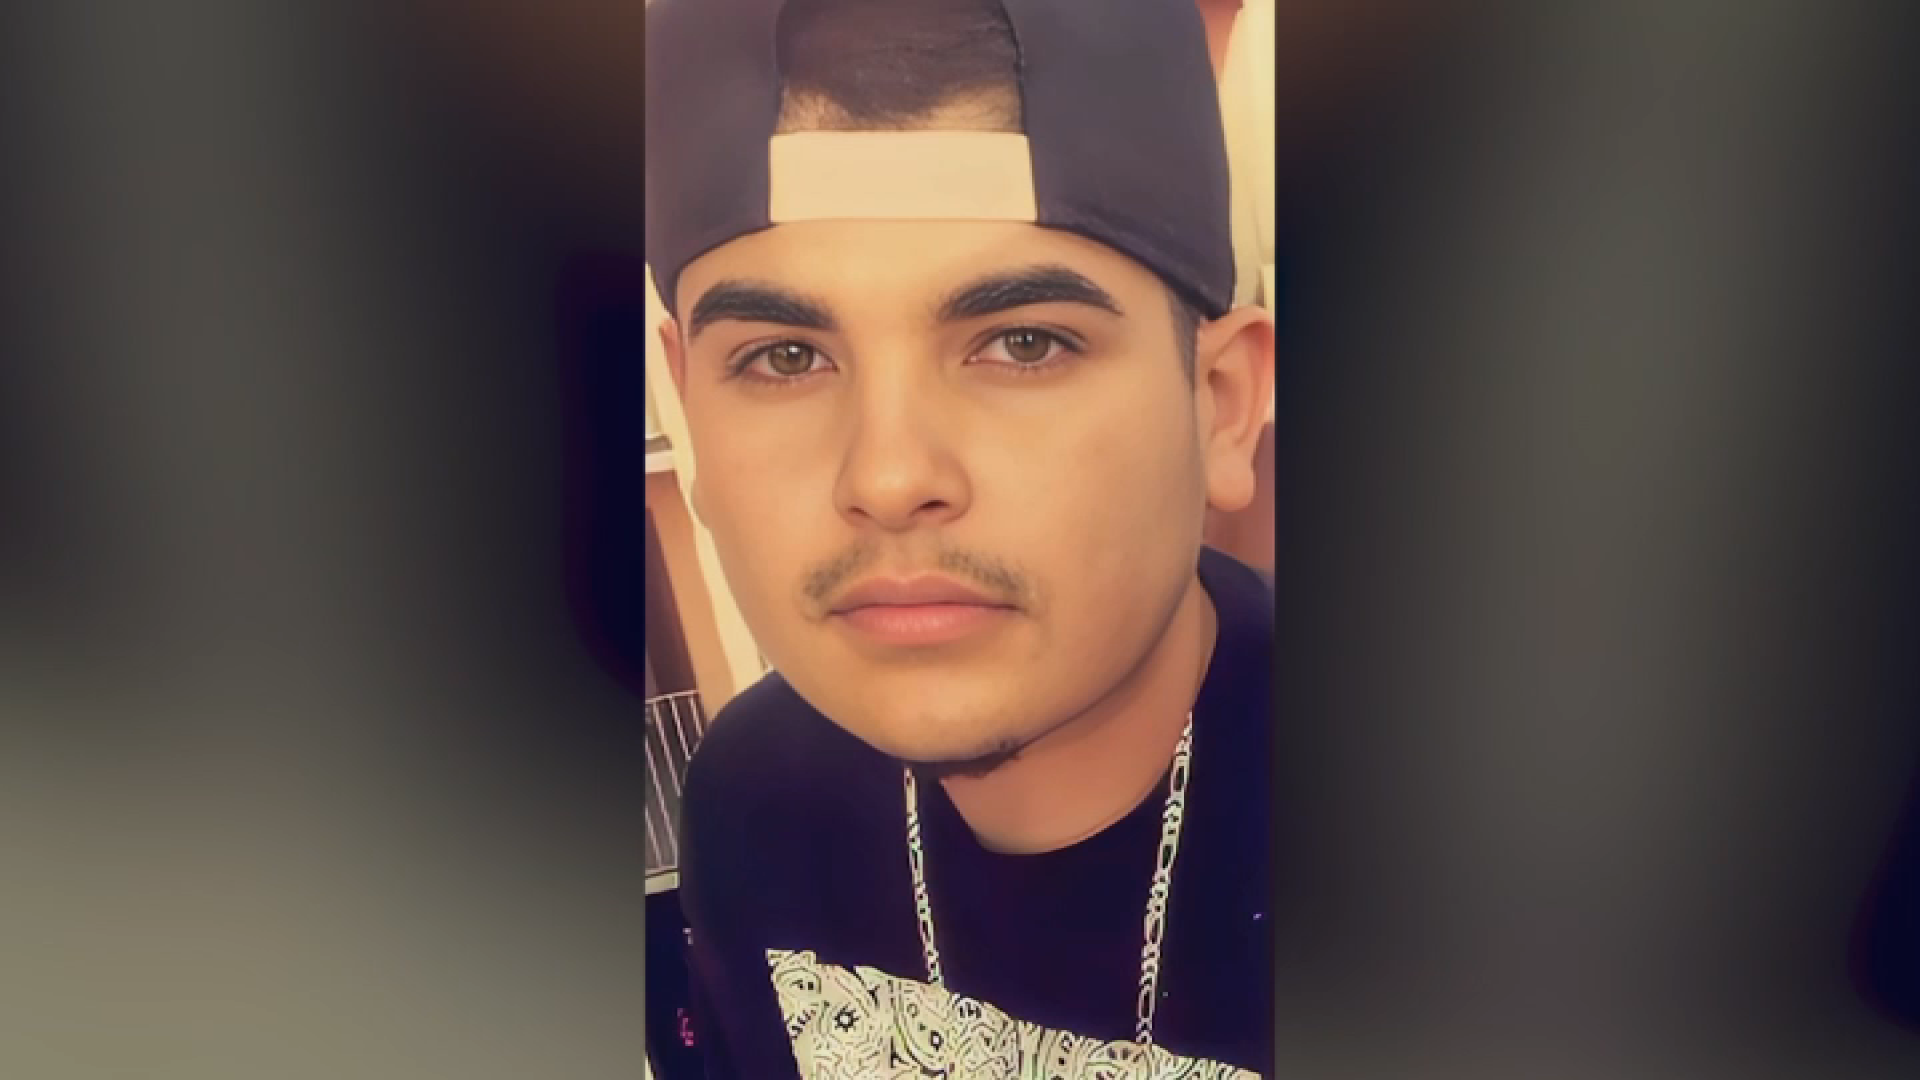 Carlos Munoz was killed in 2018 in a gang shooting.